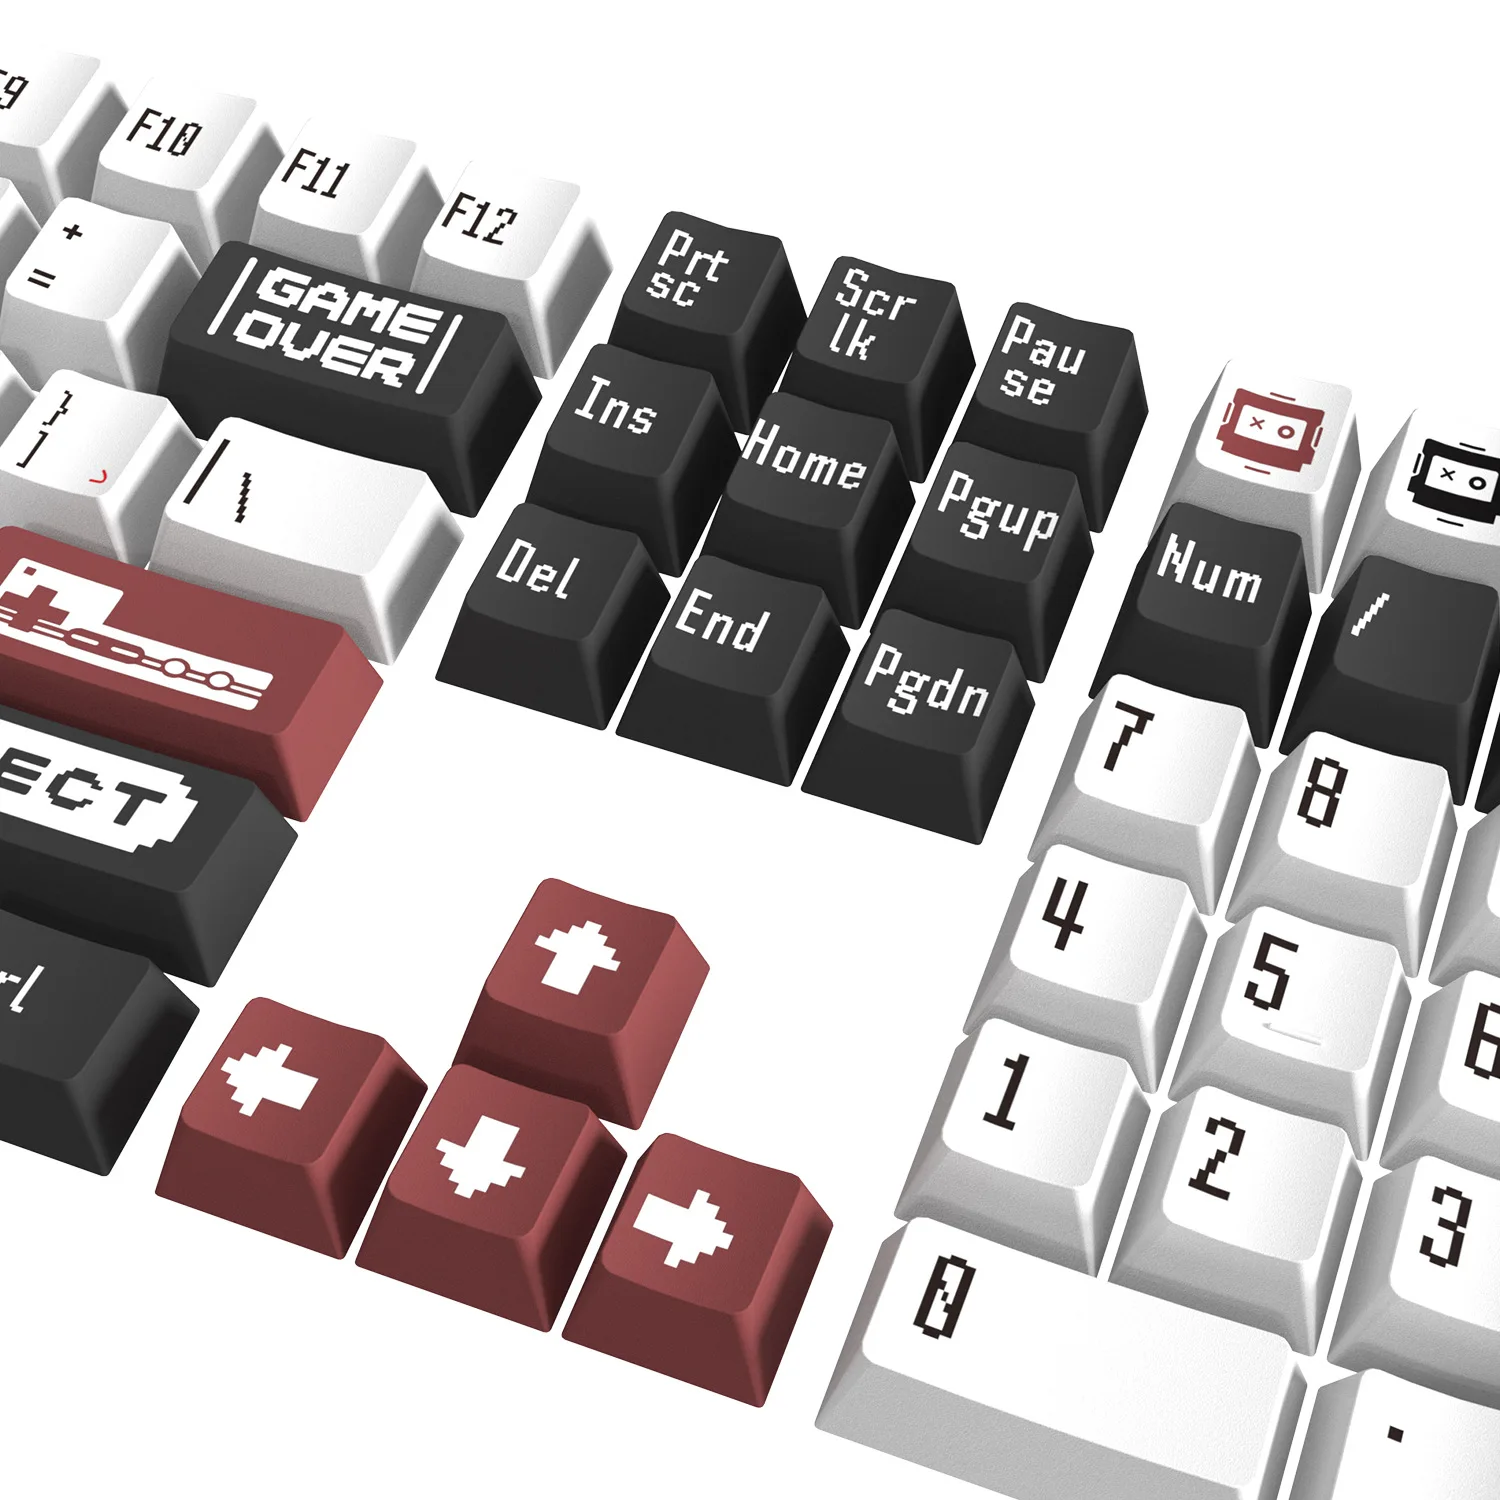 129 Keys Retro family Computer keycaps For Cherry MX Switch Mechanical Keyboard OEM Profile Dye Sublimation PBT Arabic key Caps